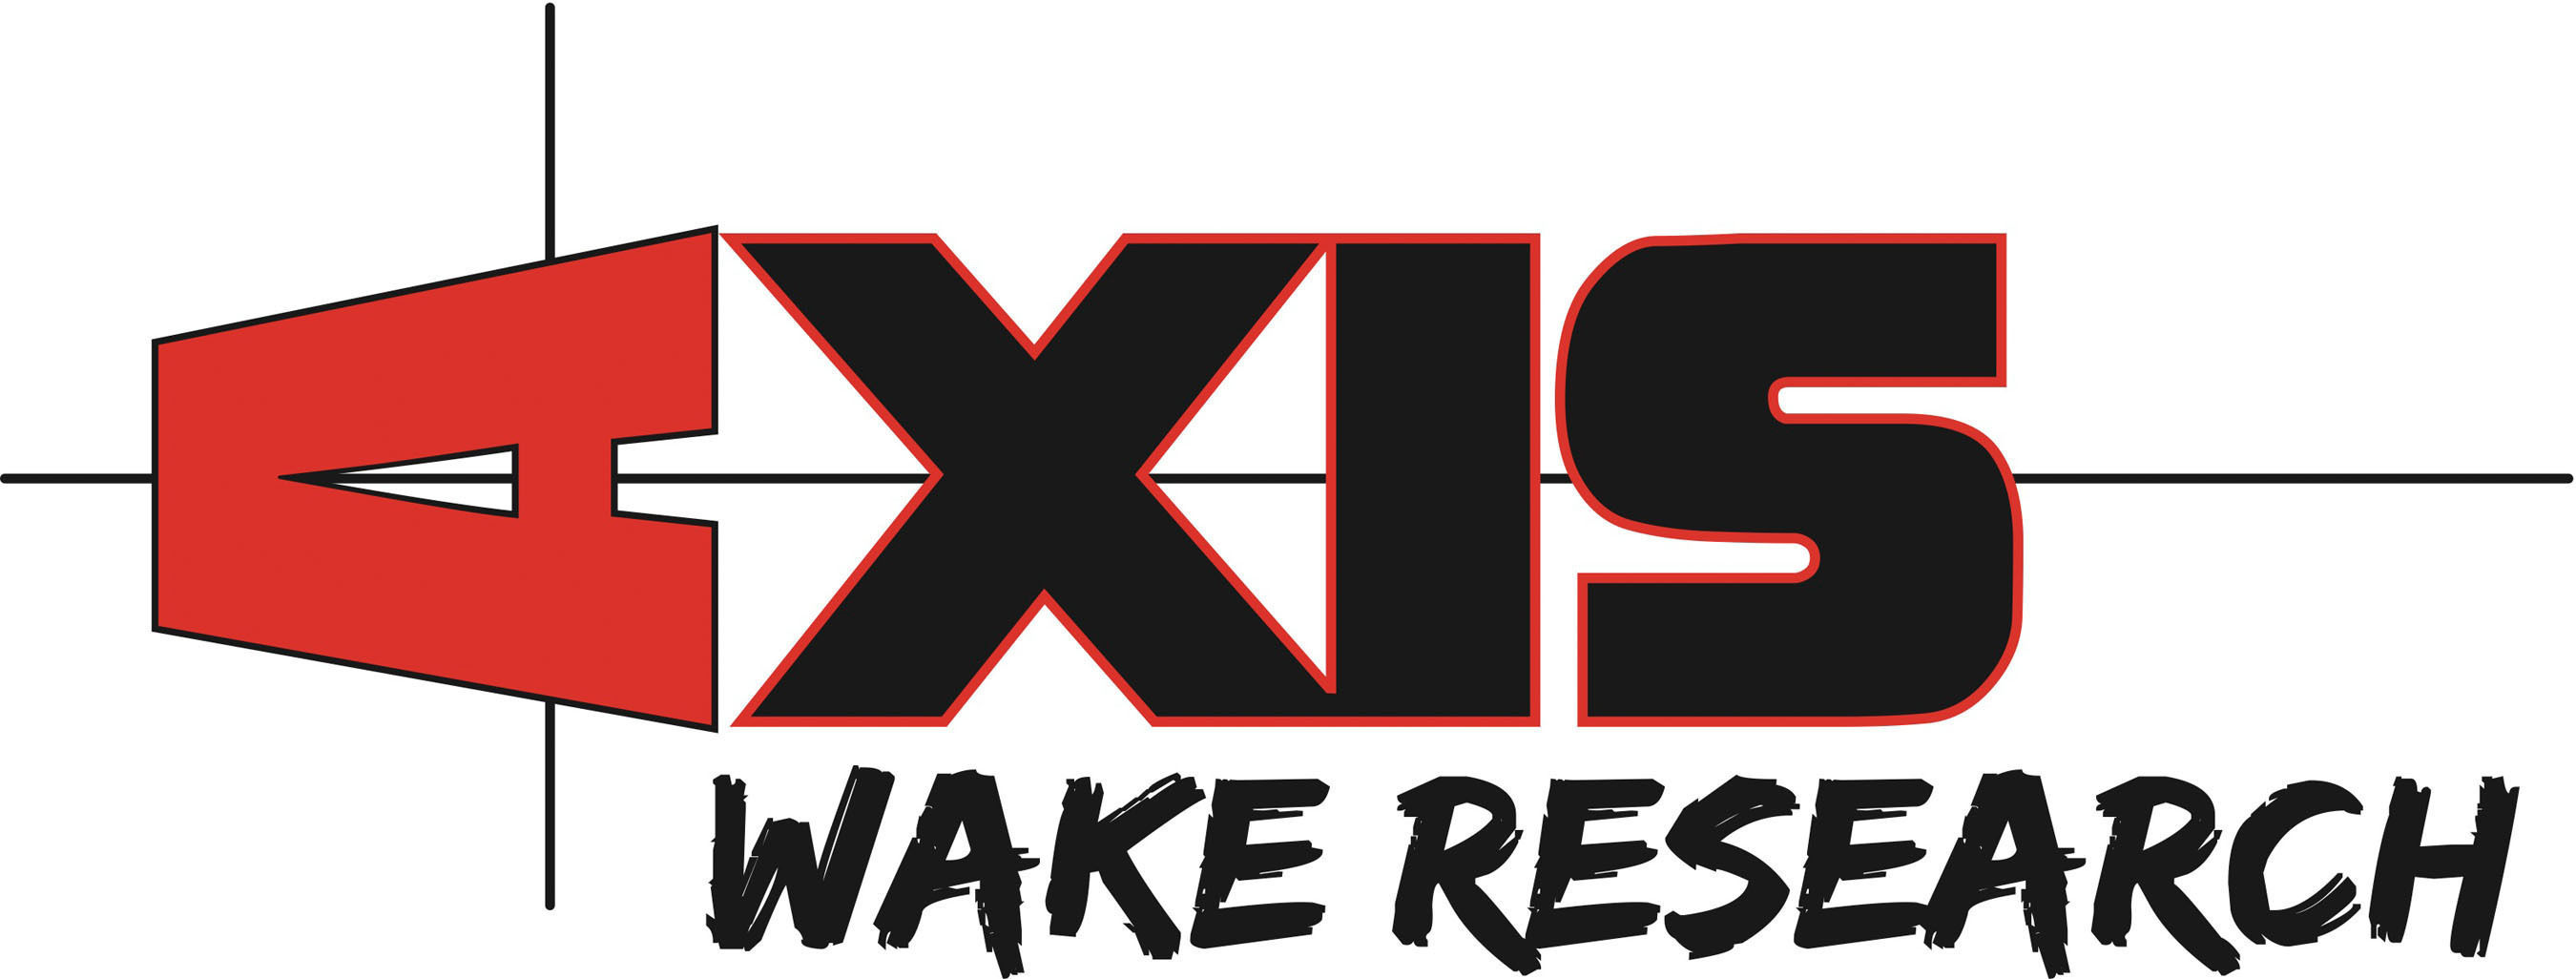 Axis Wake Research Logo